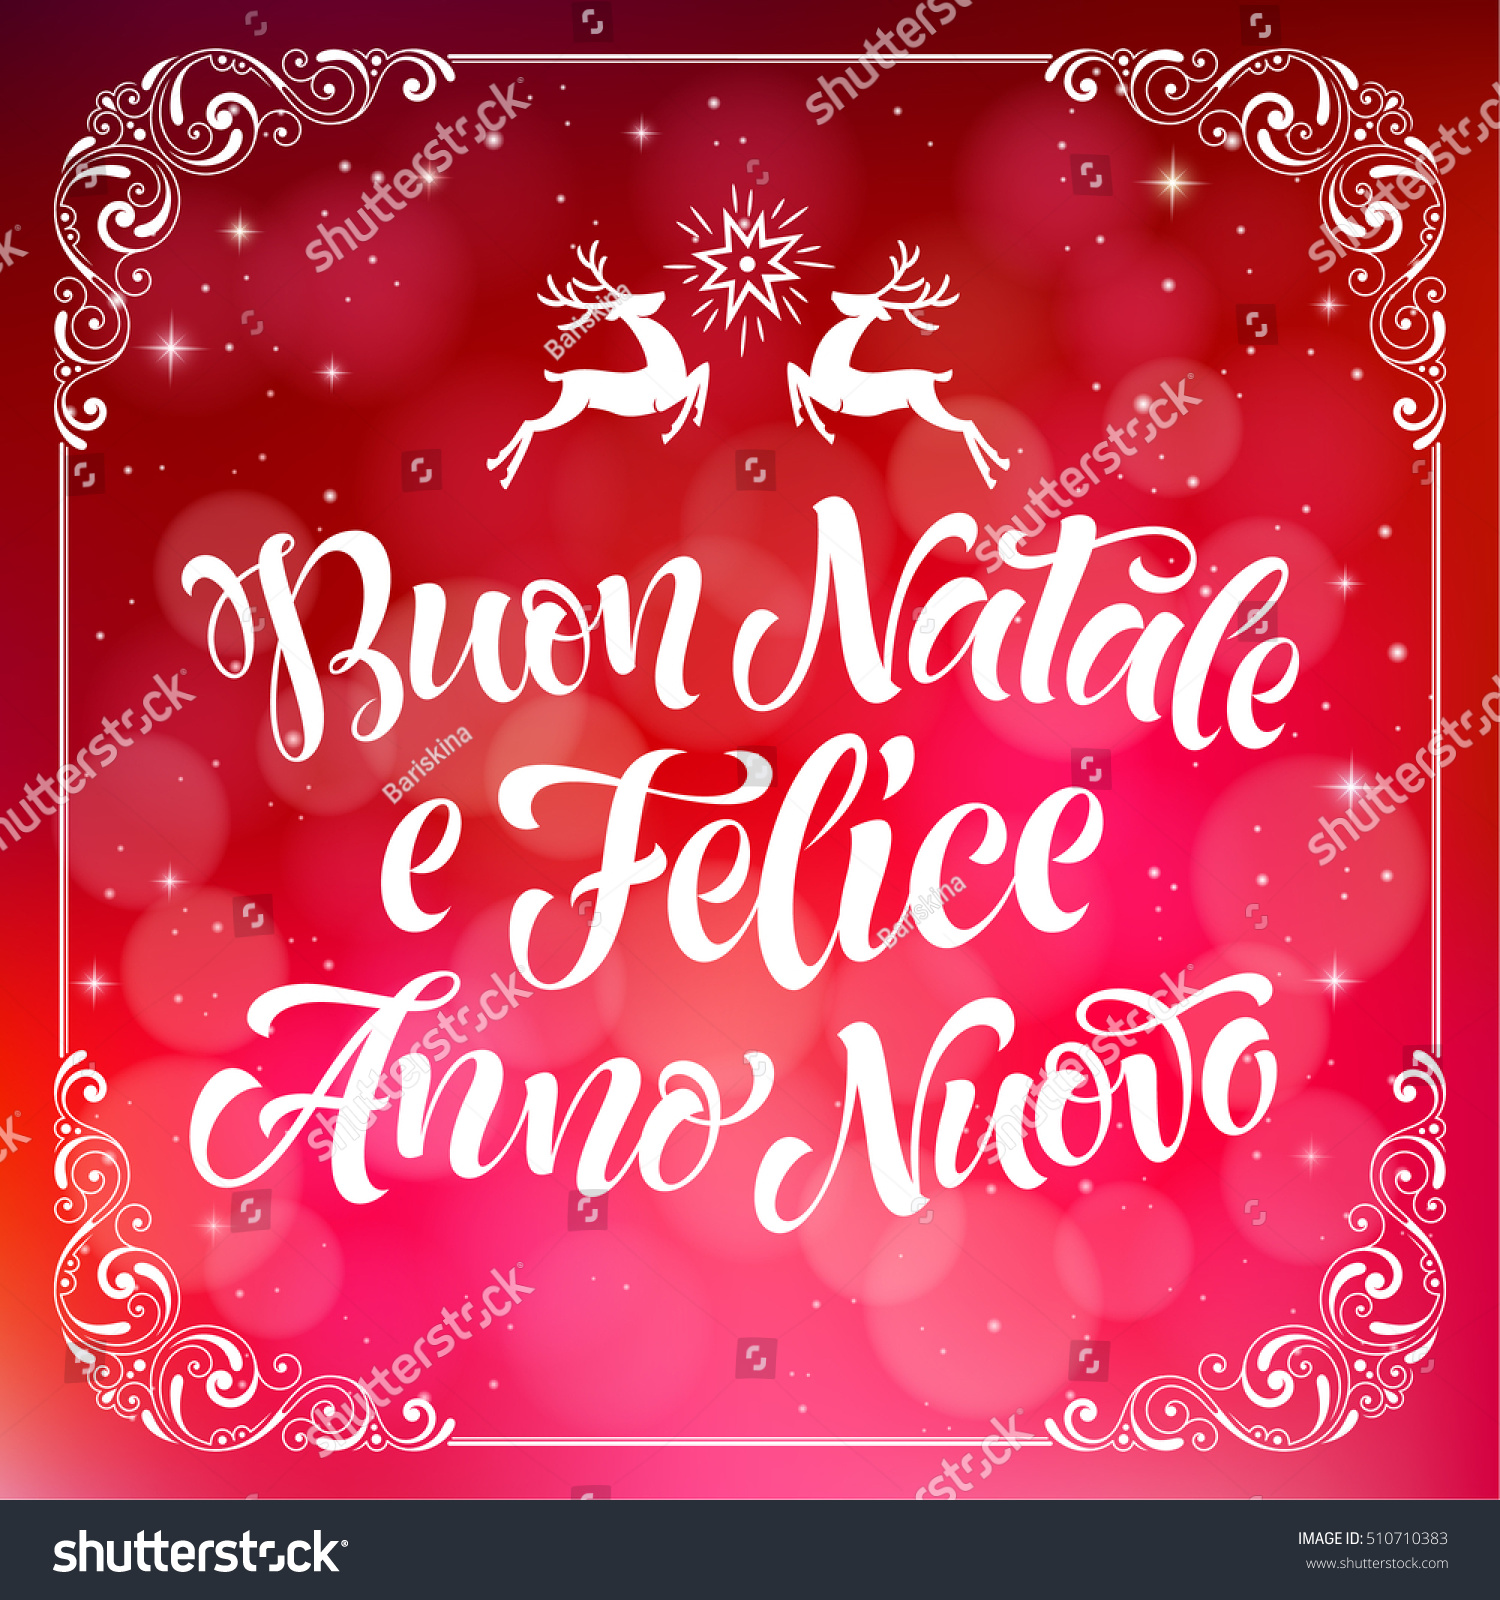 Buon Natale Happy New Year.Merry Christmas Happy New Year Text Stock Vector Royalty Free 510710383